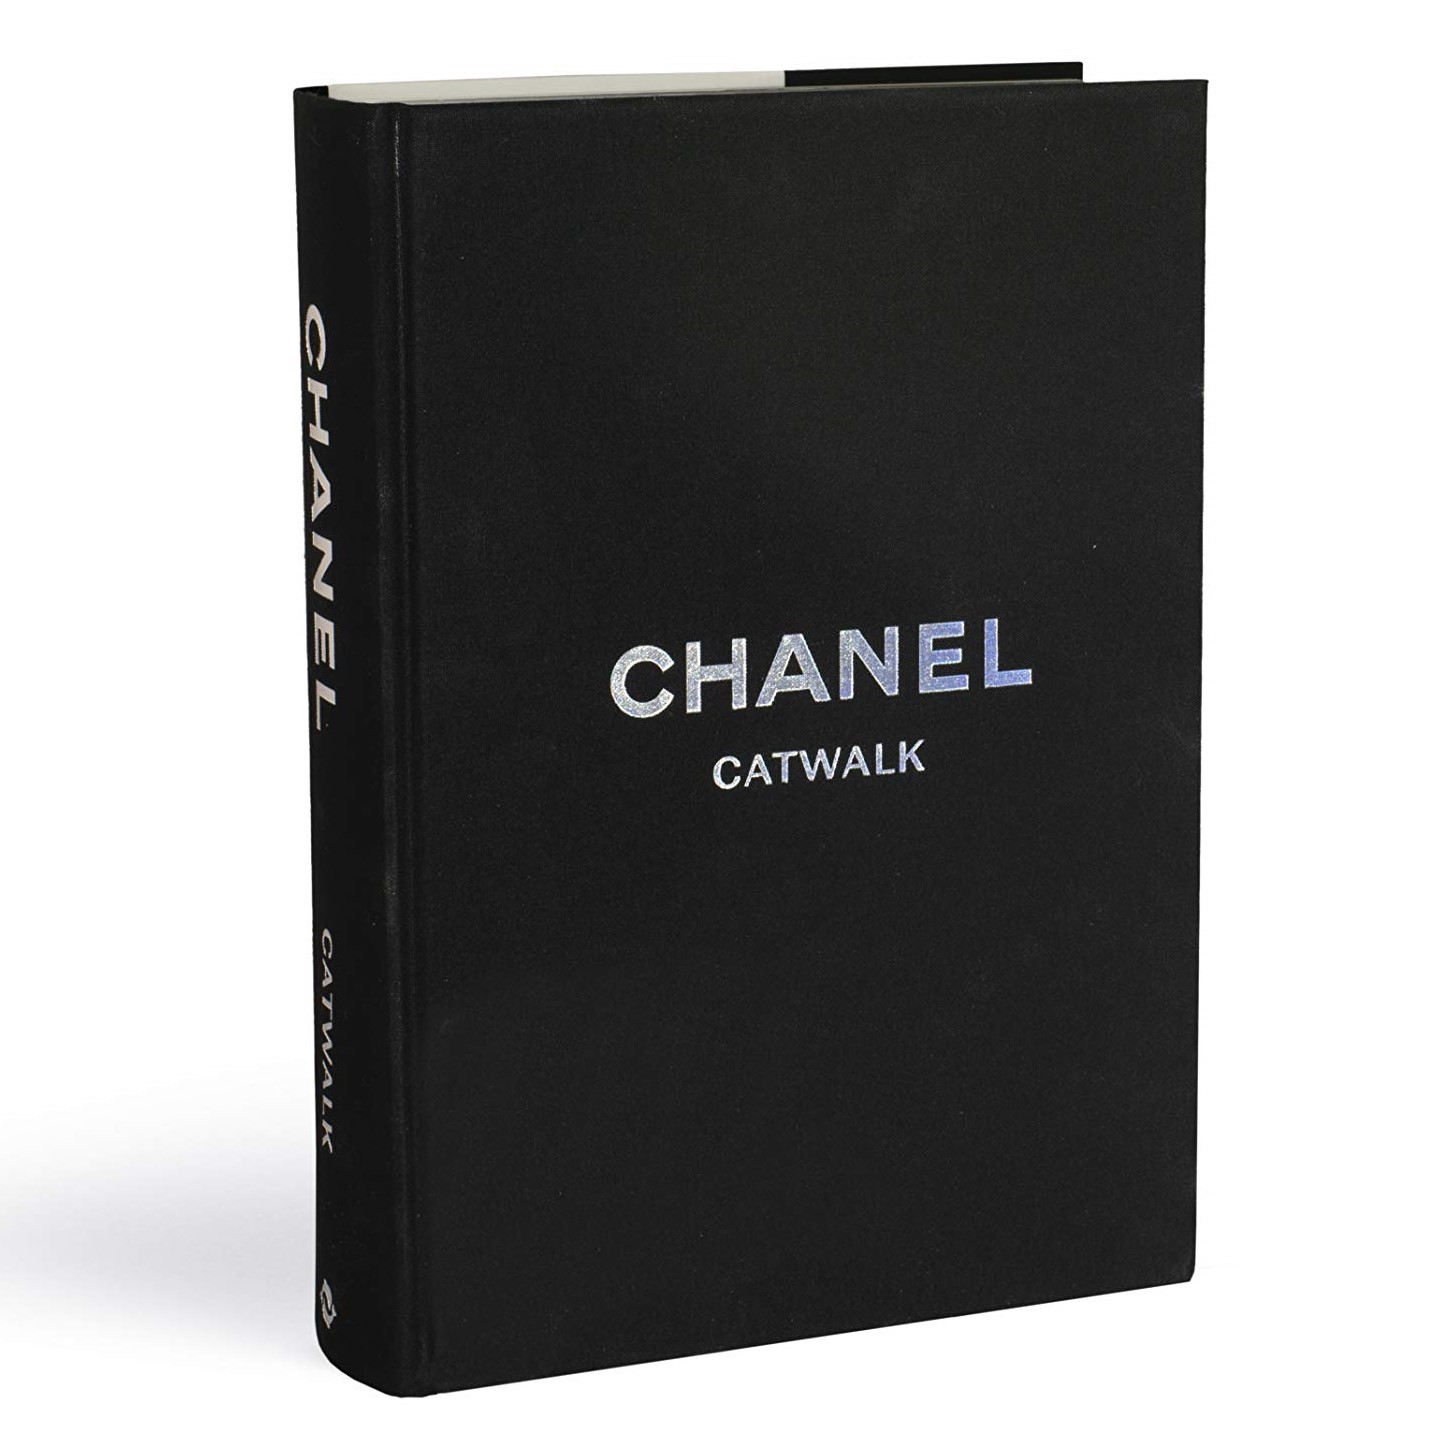 Chanel Catwalk 香奈儿t台秀 卡尔拉格斐 英文原版 老佛爷经典秀场作品 时尚艺术摄影 The Complete Karl Lagerfeld Collections